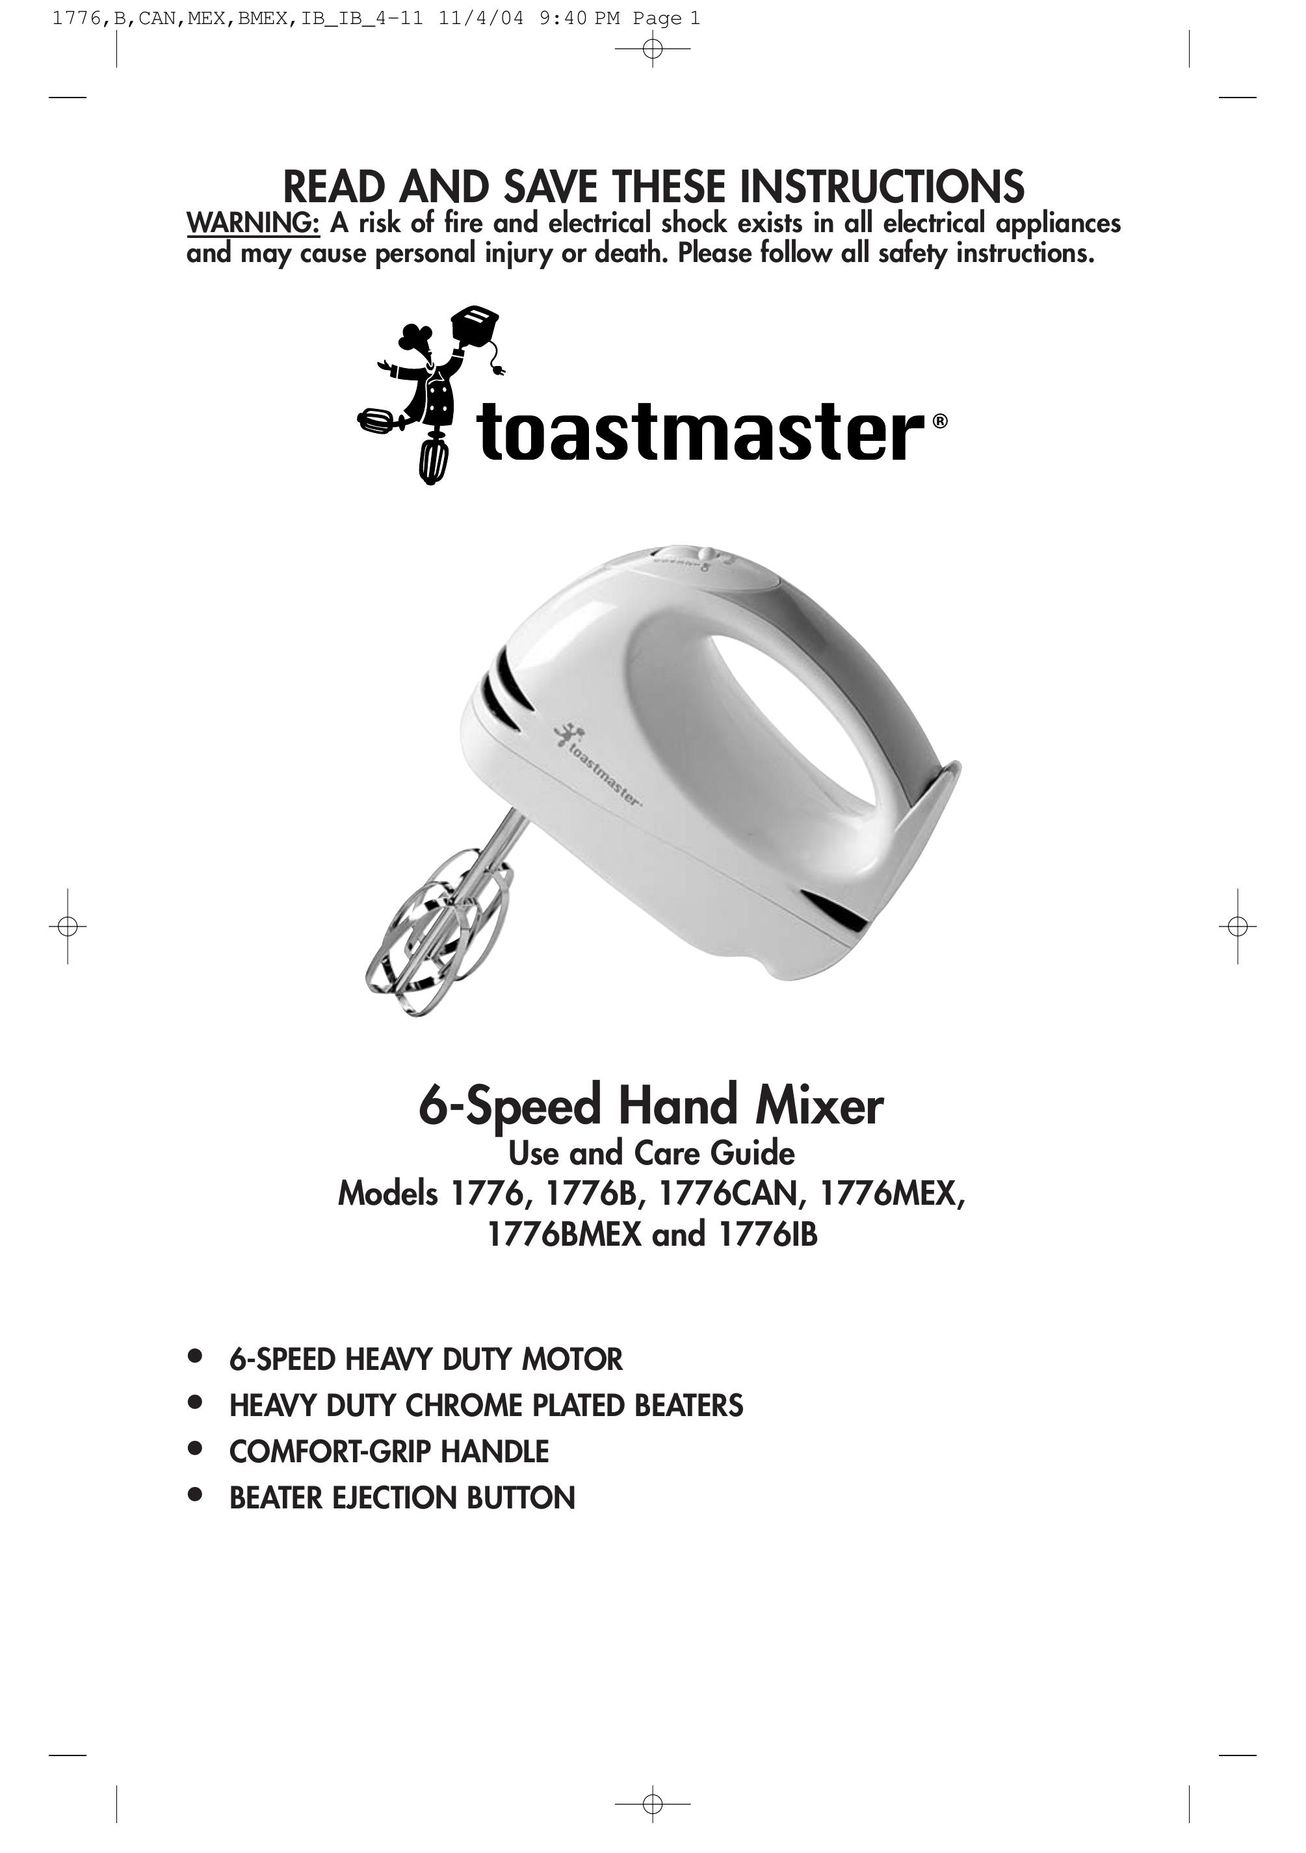 Toastmaster 1776CAN Mixer User Manual